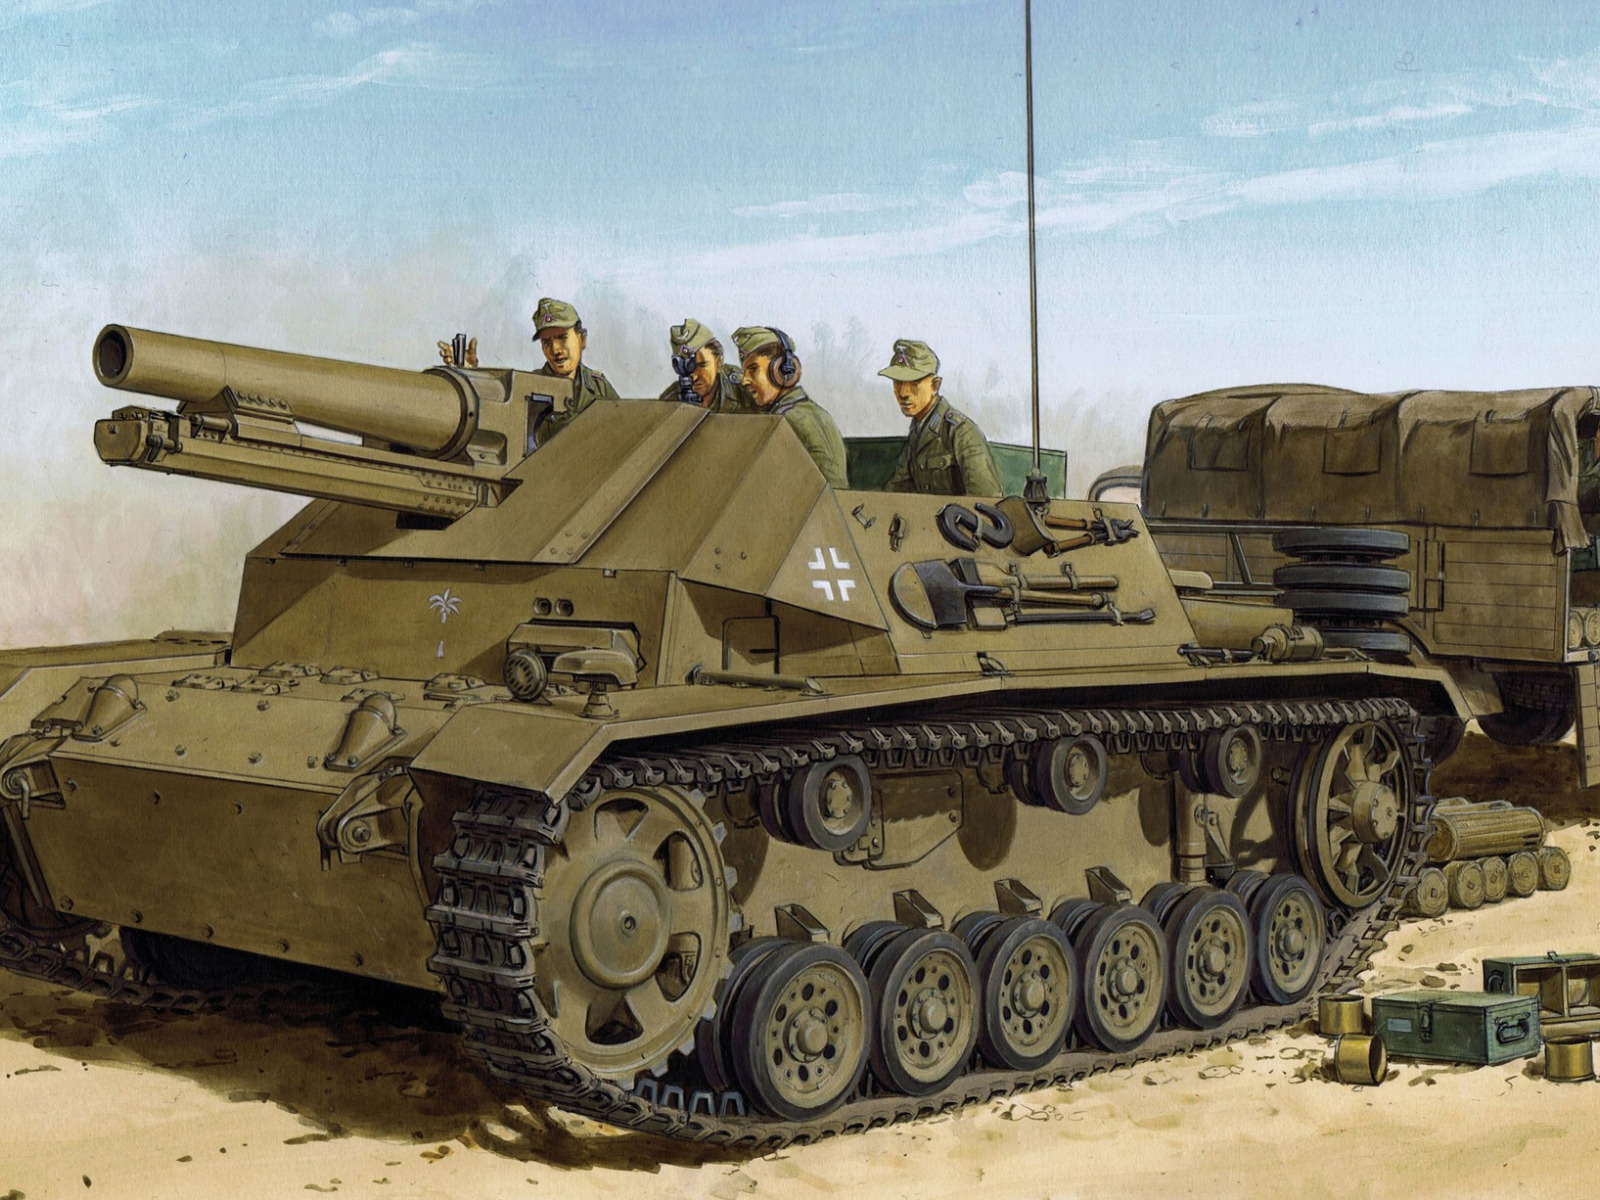 Немецкие артиллерийские танки. 15 Cm sig 33 auf FGST. PZ.Kpfw.III (SF). PZ 3 sig 33. САУ 15 cm sig 33 auf PZ.II Sturmpanzer. 15cm sig 33 auf Fahrgestell PZ.Kpfw.III(SF).